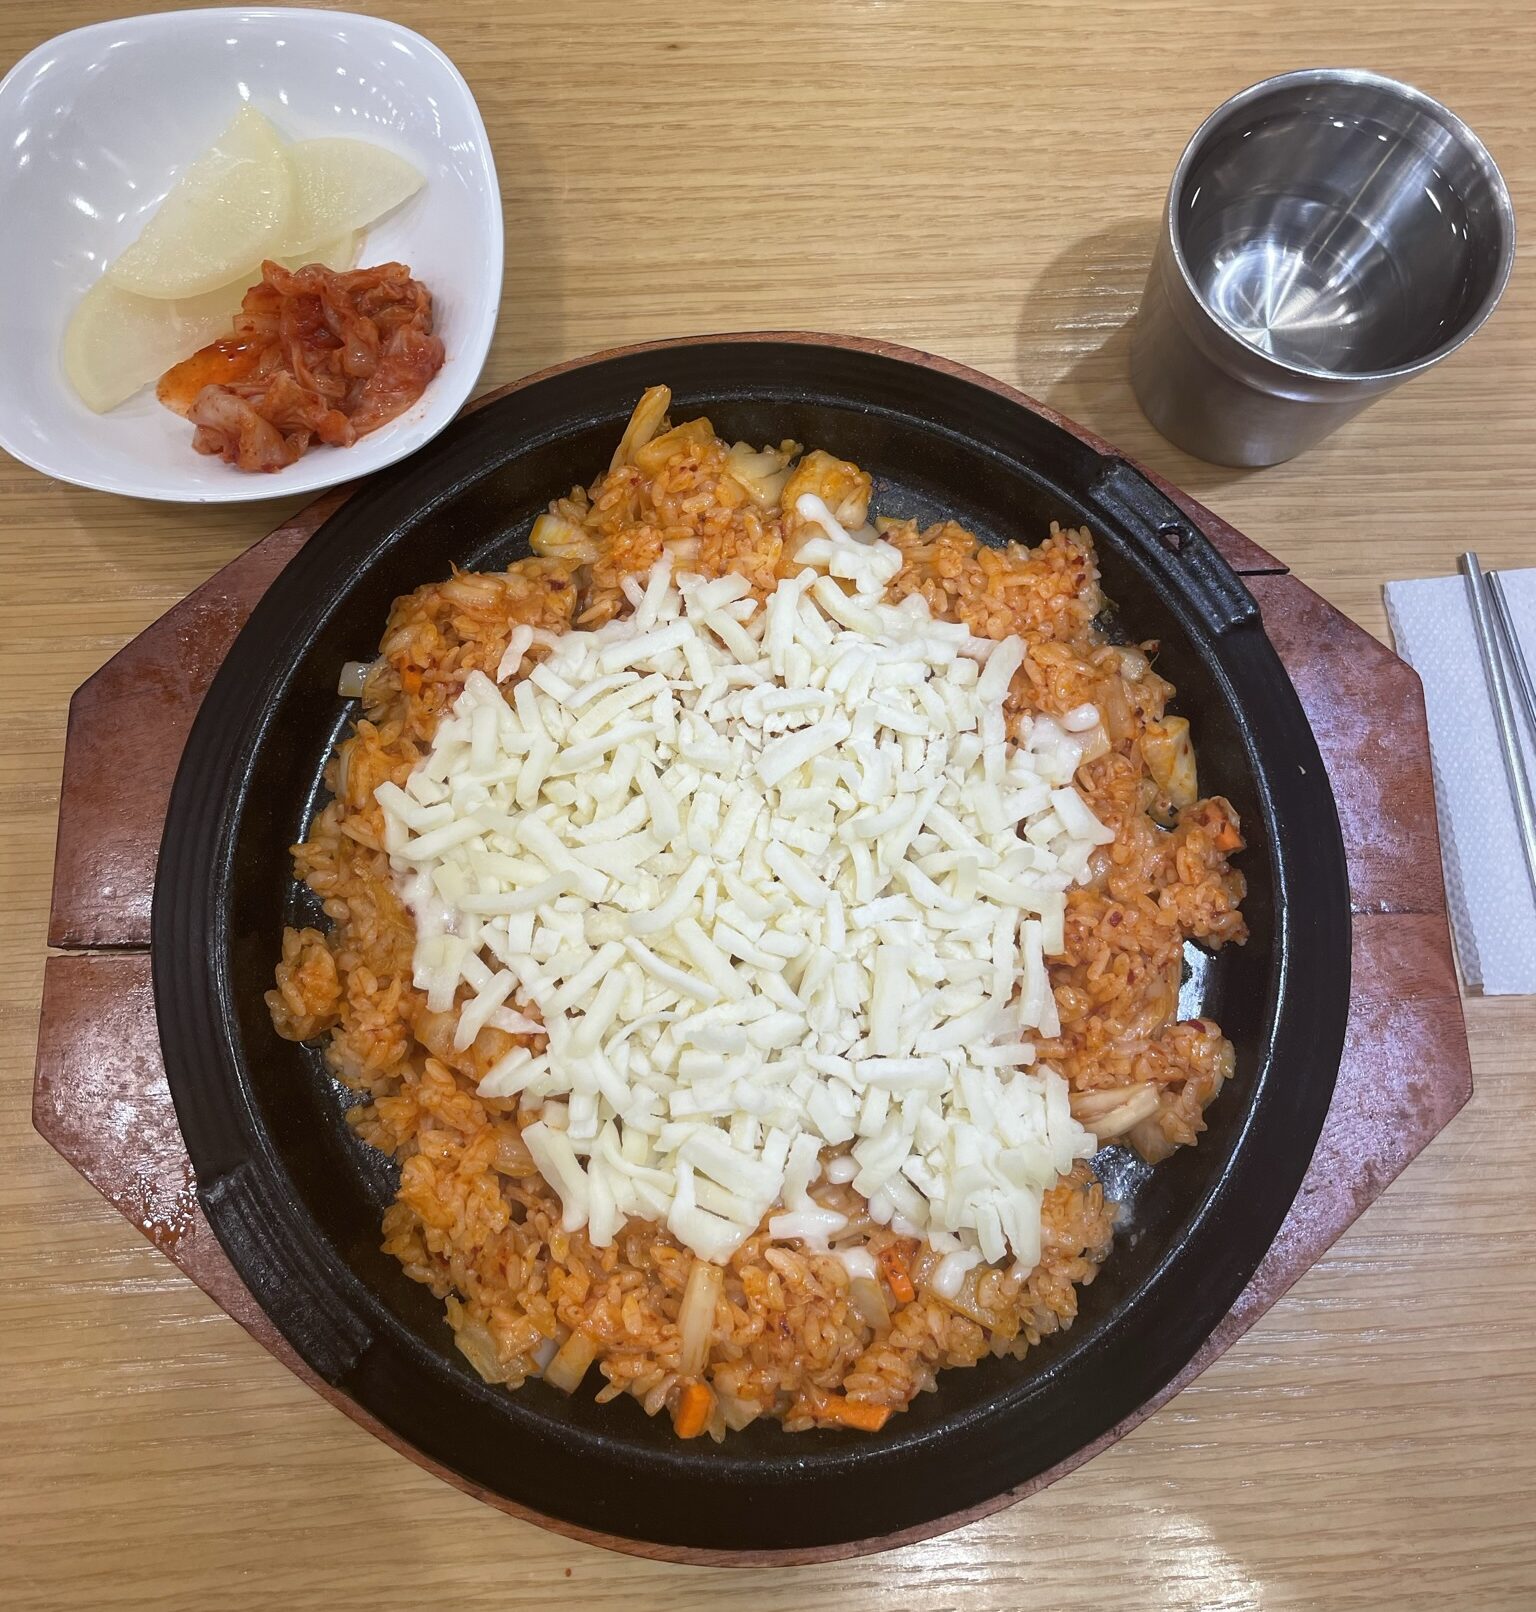 Dakgalbi pan - Maangchi's Korean cooking kitchenware